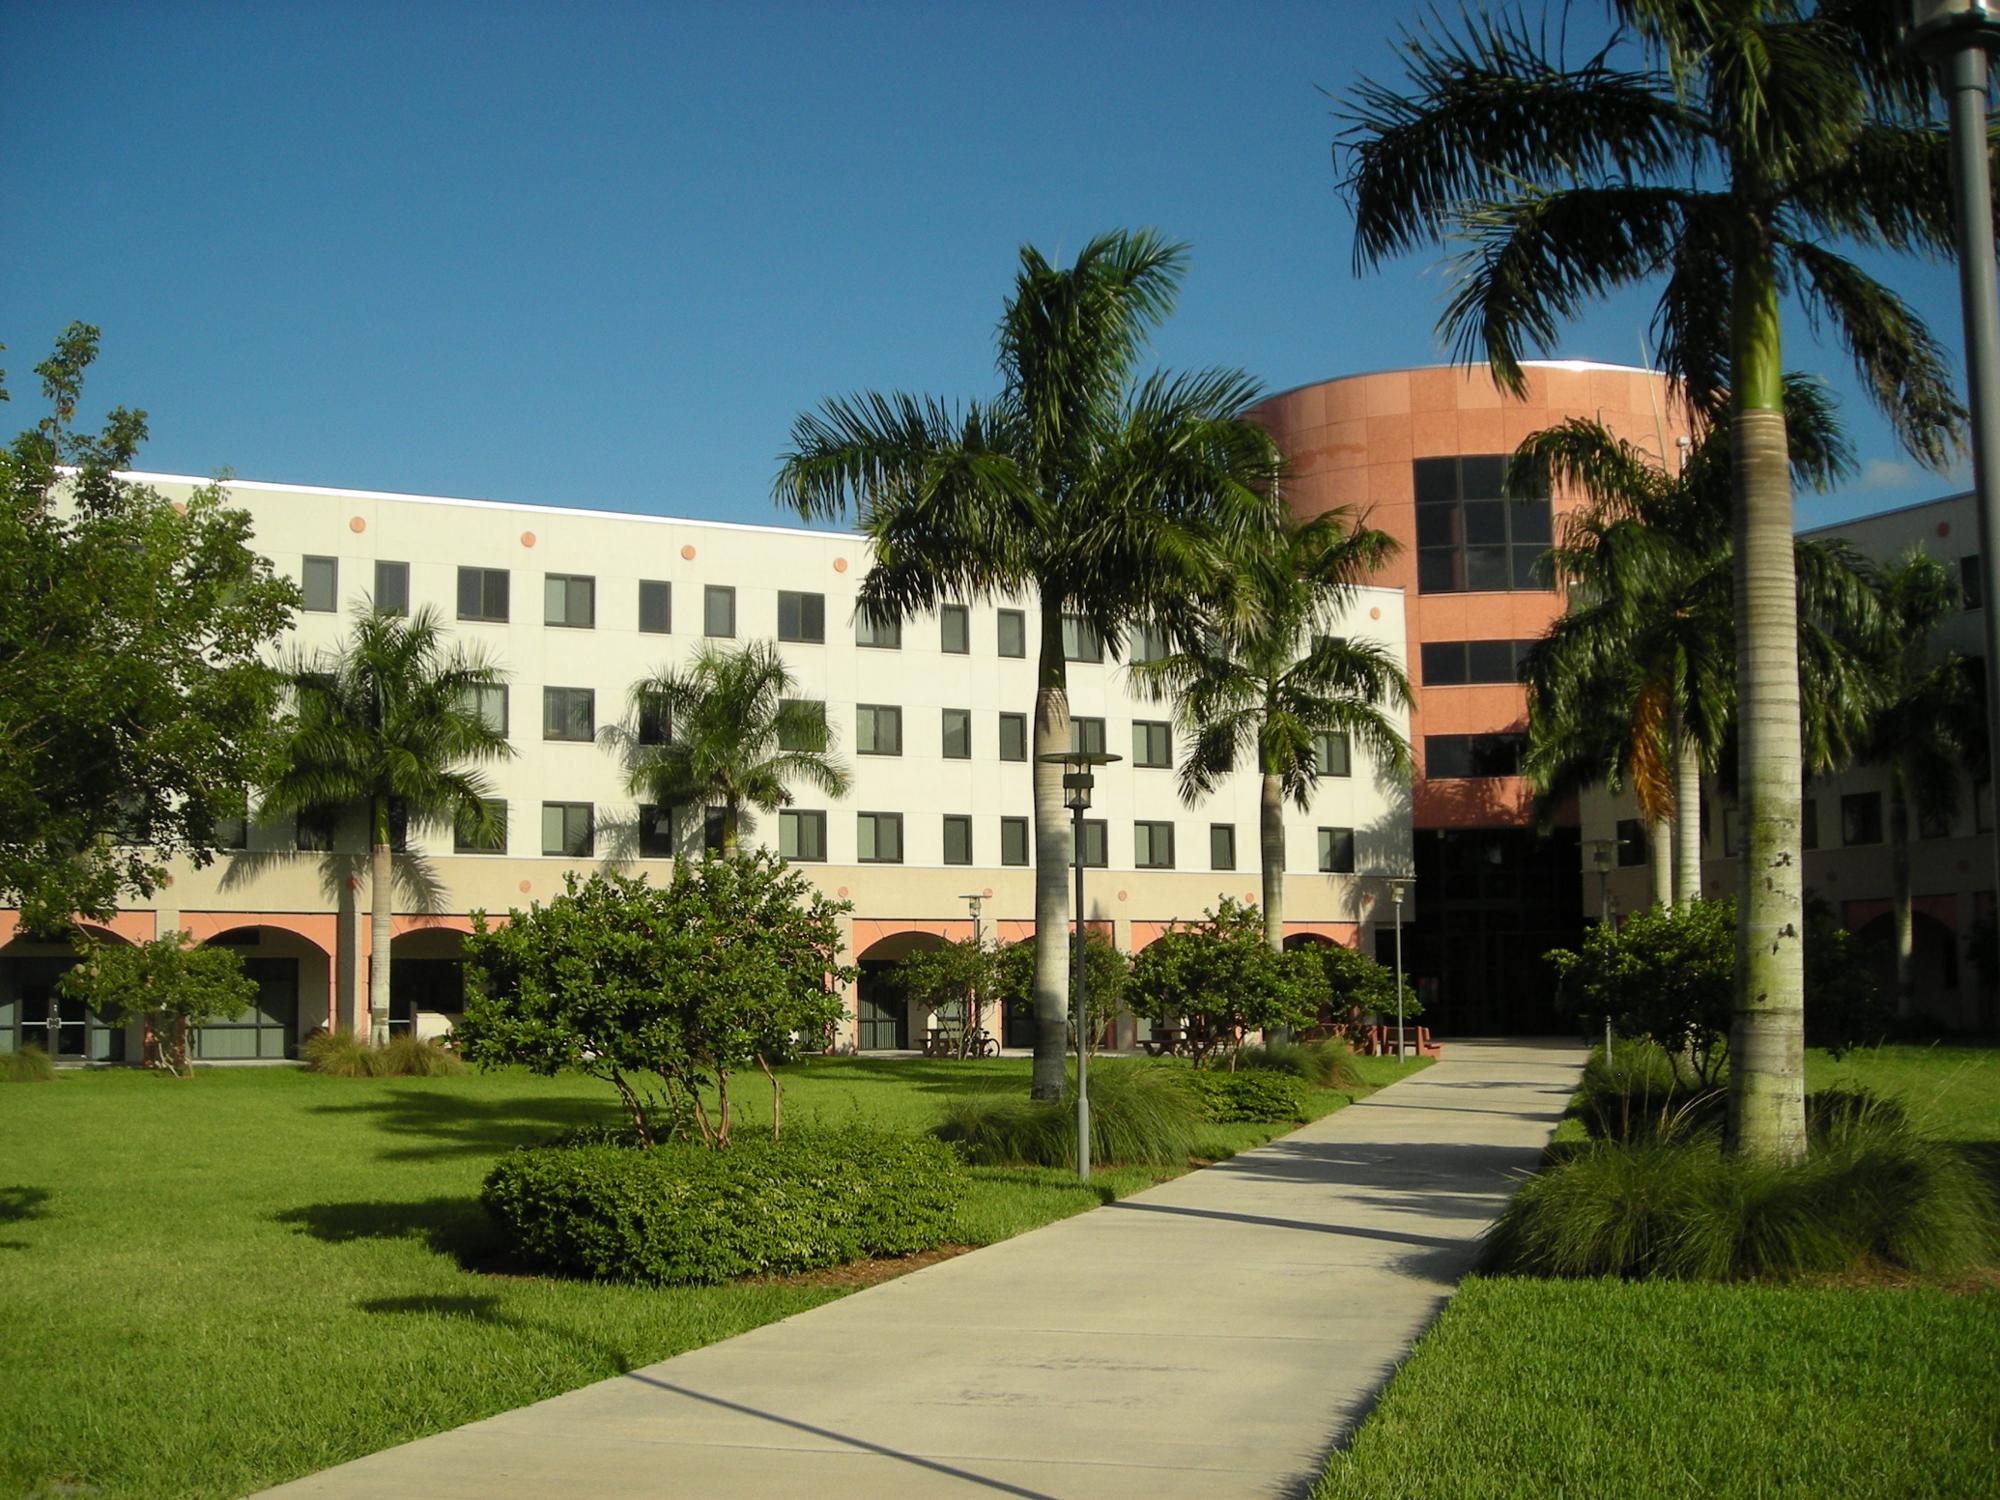 florida international university phd finance